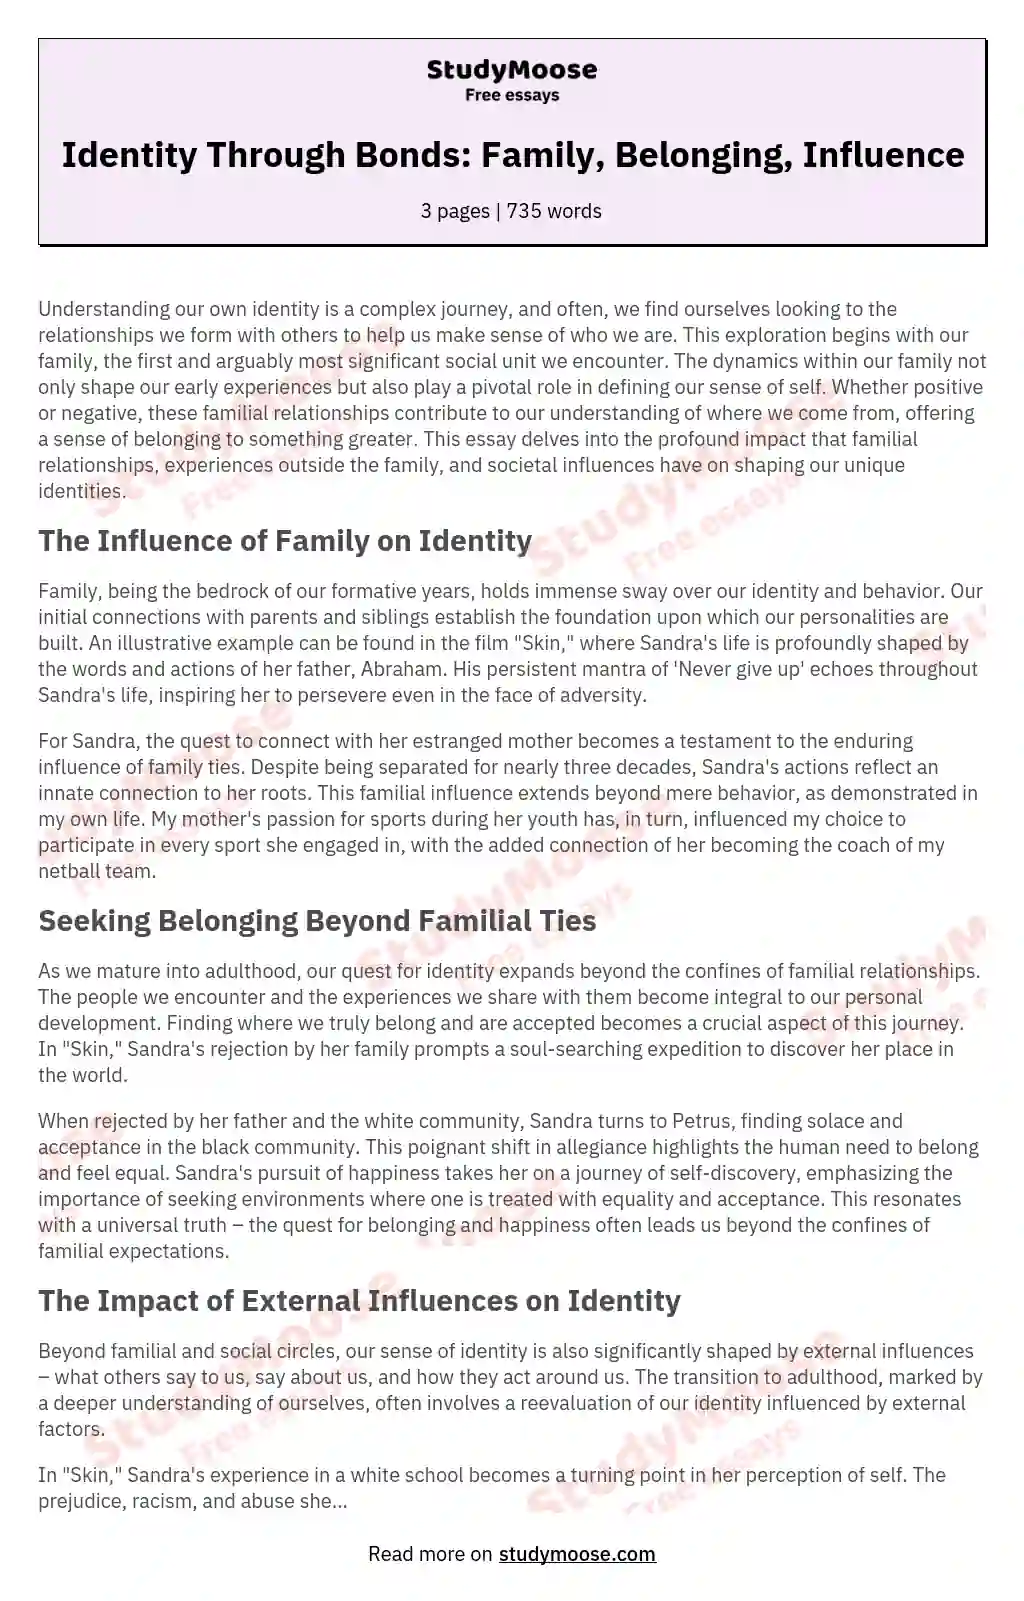 Identity Through Bonds: Family, Belonging, Influence essay